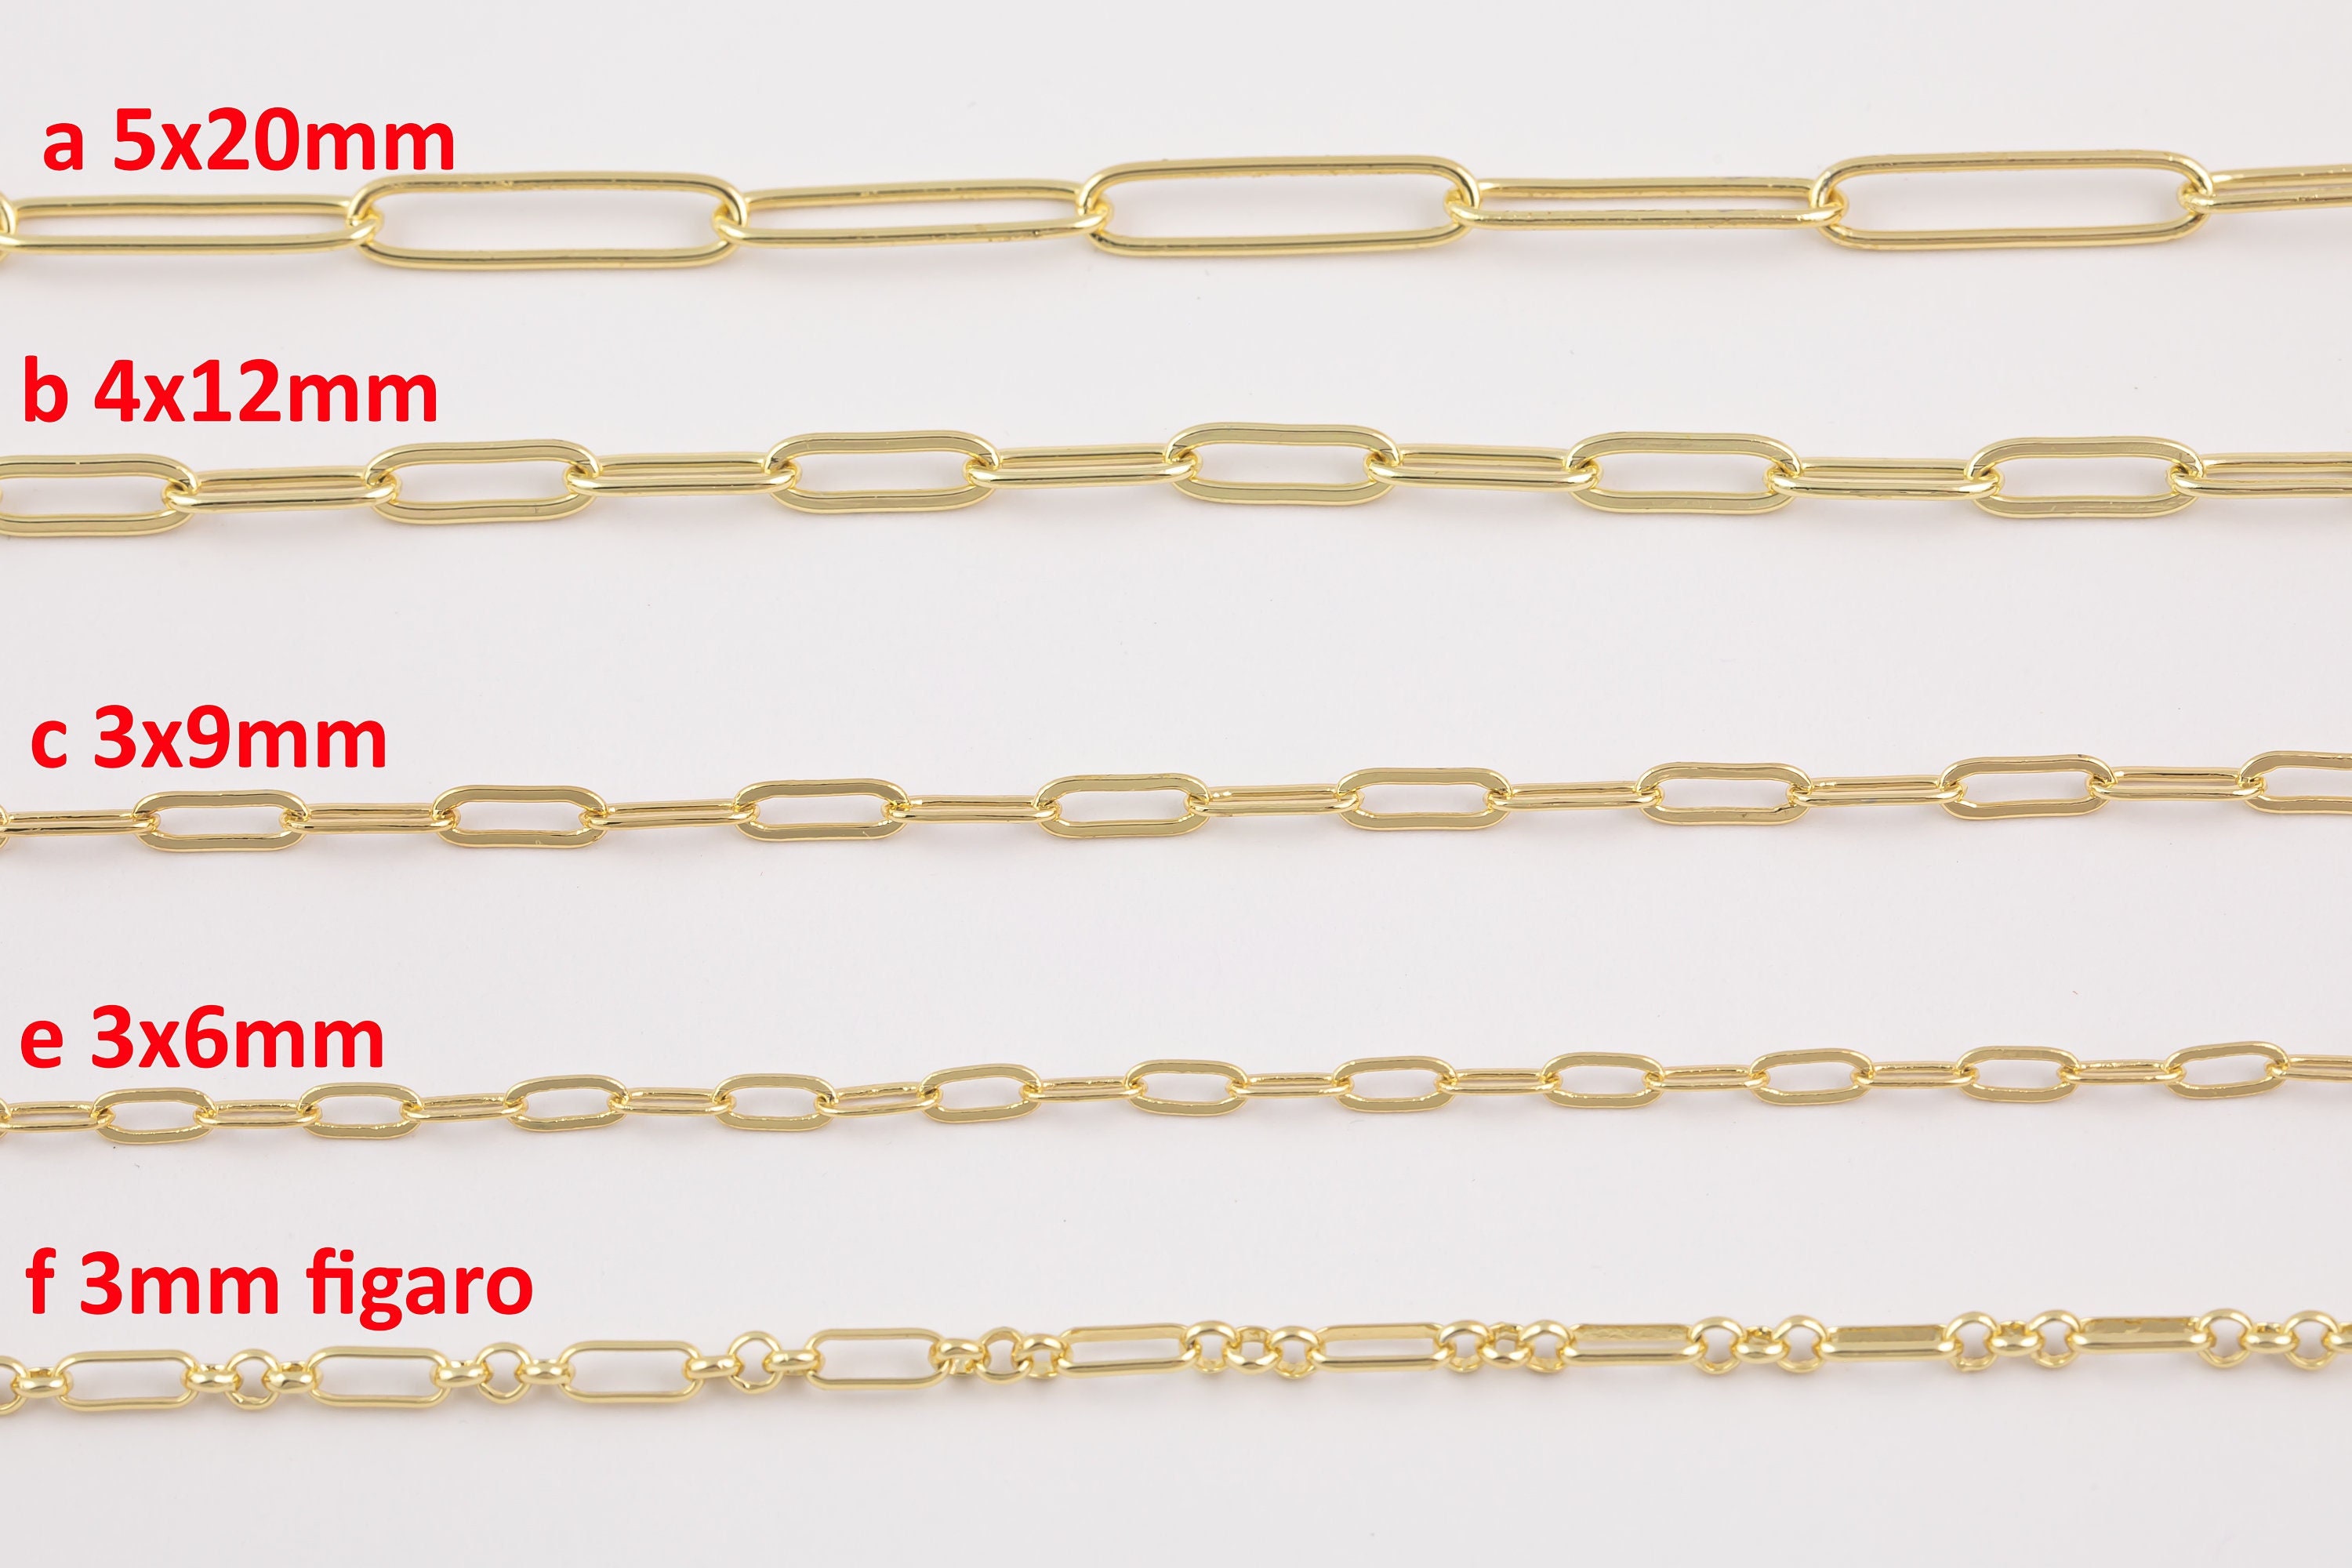 1 x Metre 5mm Tarnish Resistant Gold Plated Decorative Chain #CBRAD61